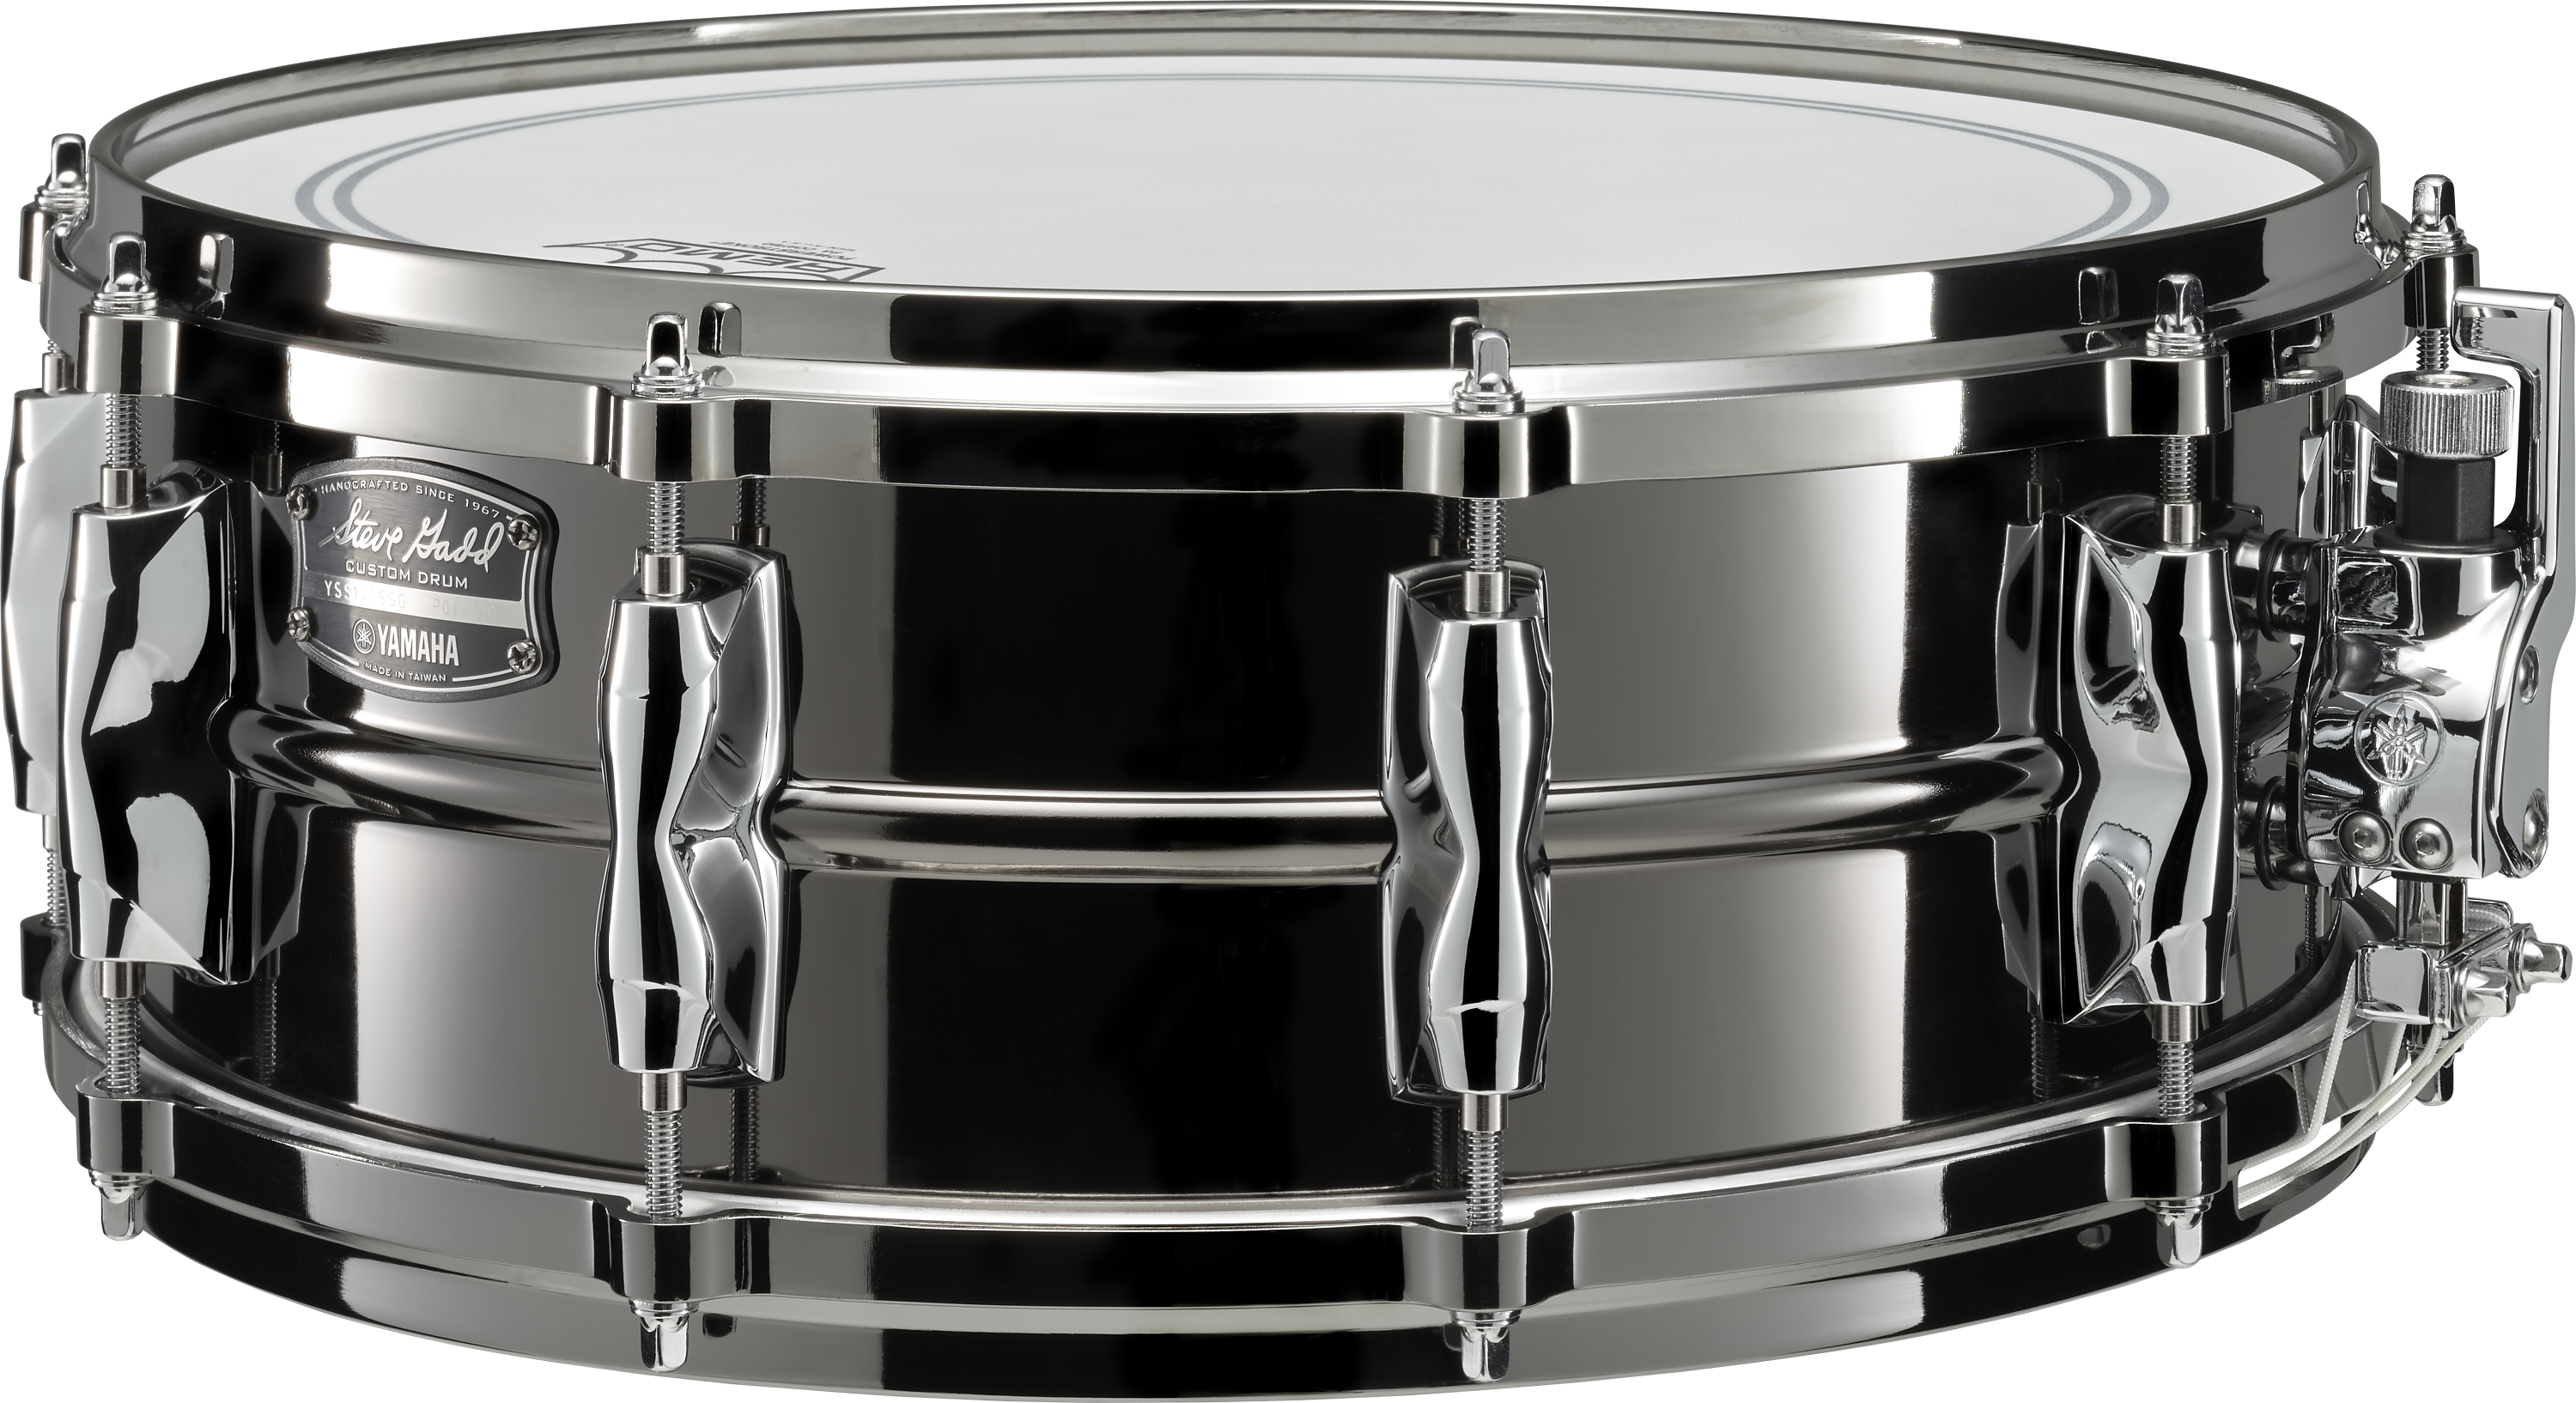 Yamaha Steve Gadd Signature Snare Drum - 5.5 x 14 inch - Black 